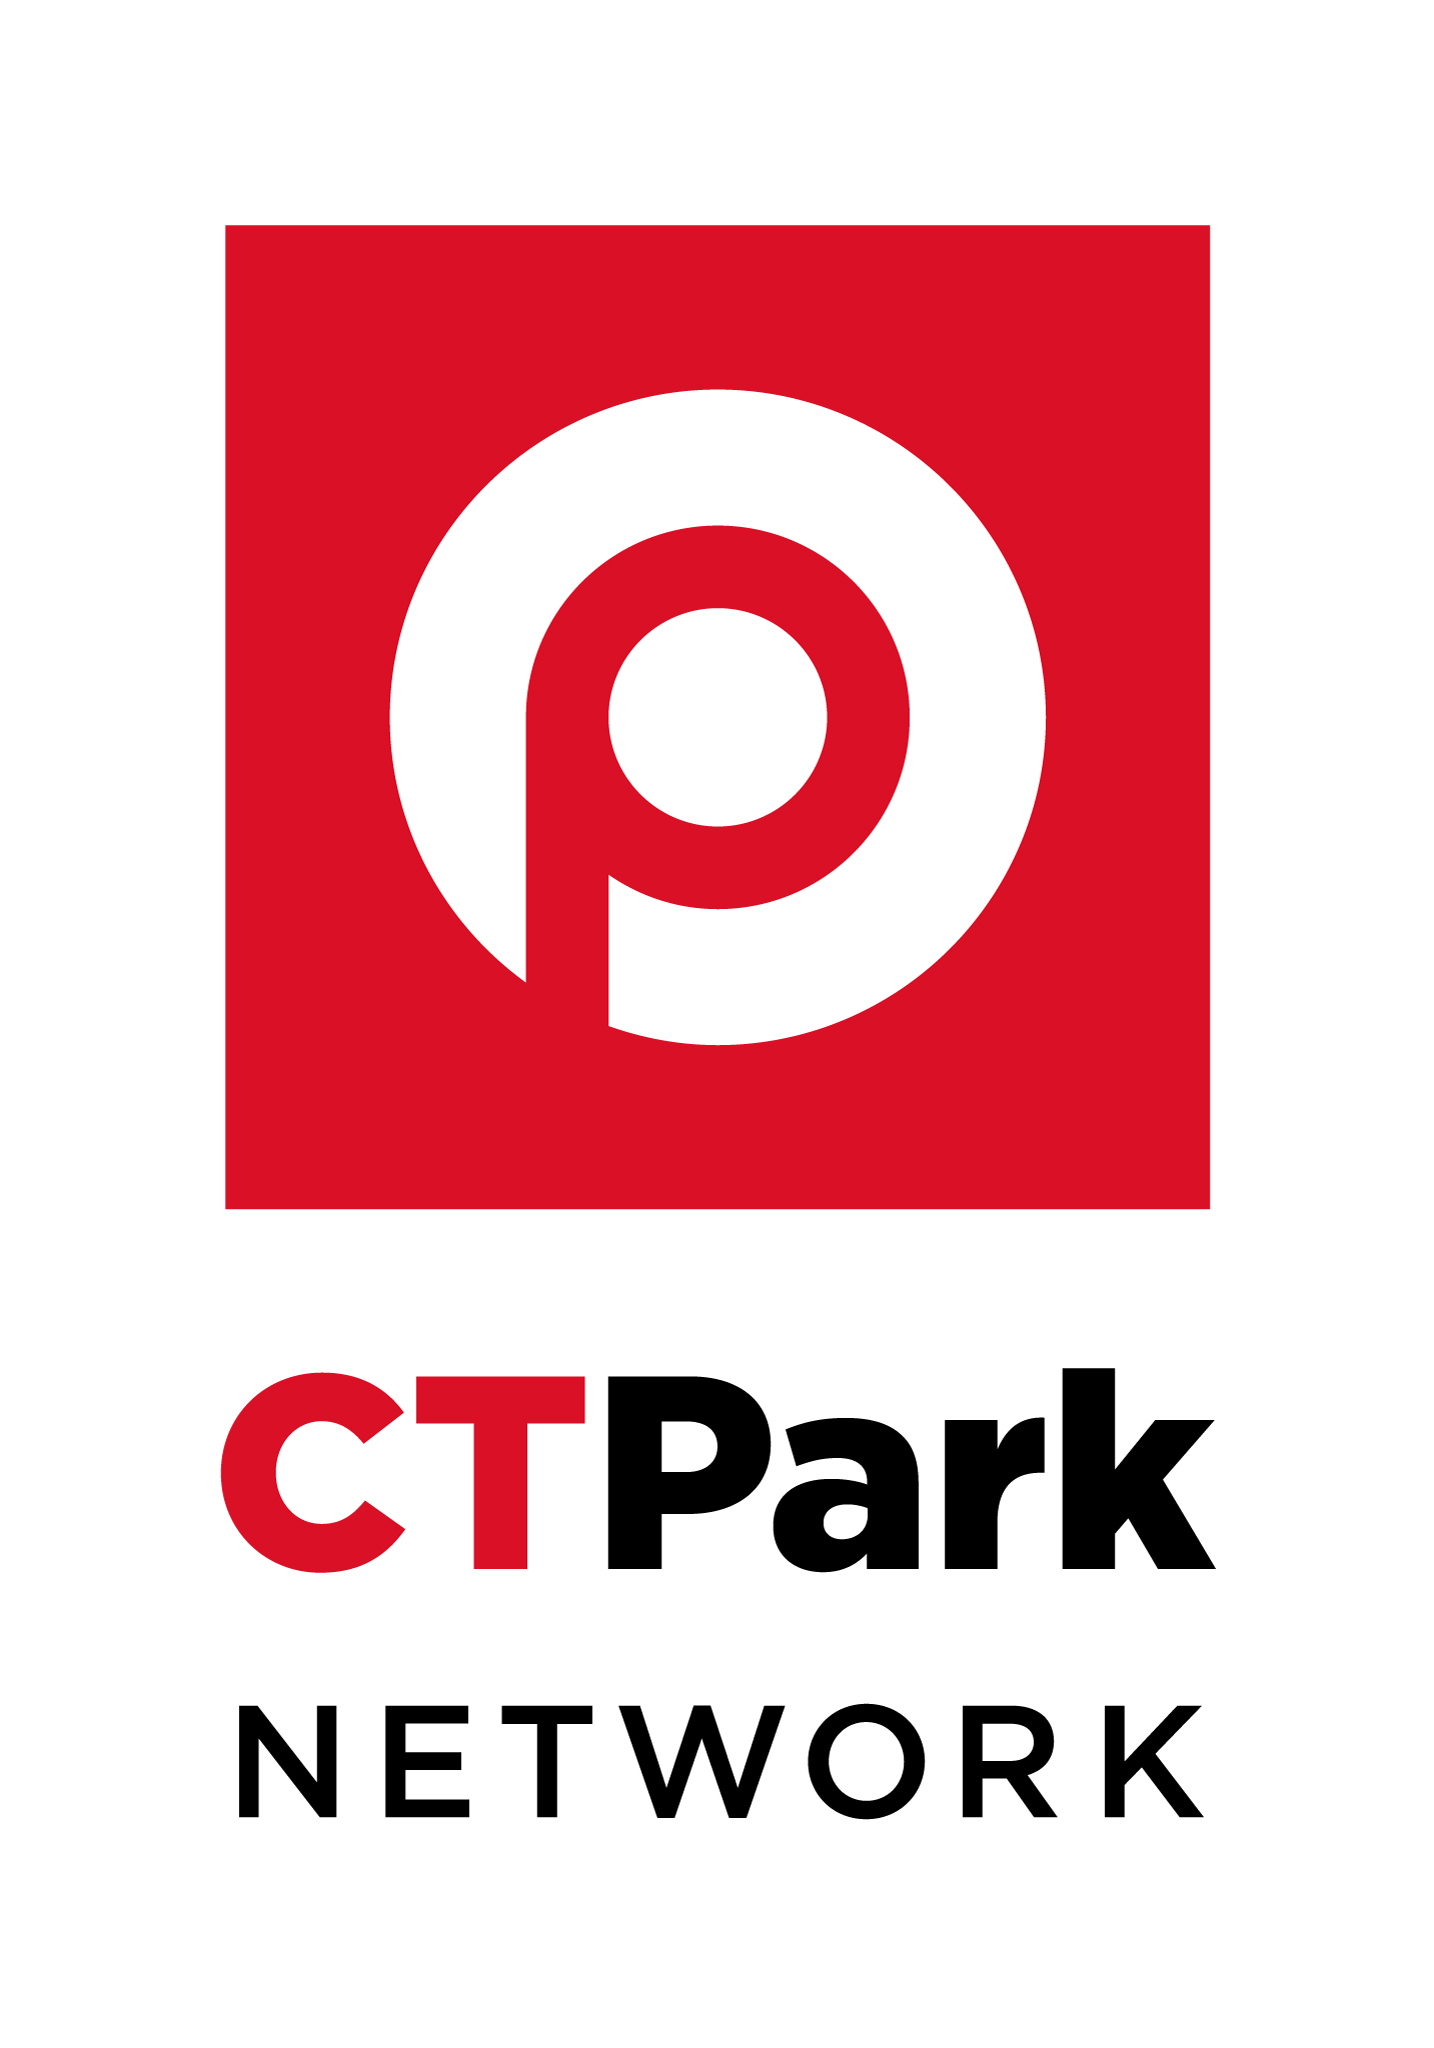 CTPark Network